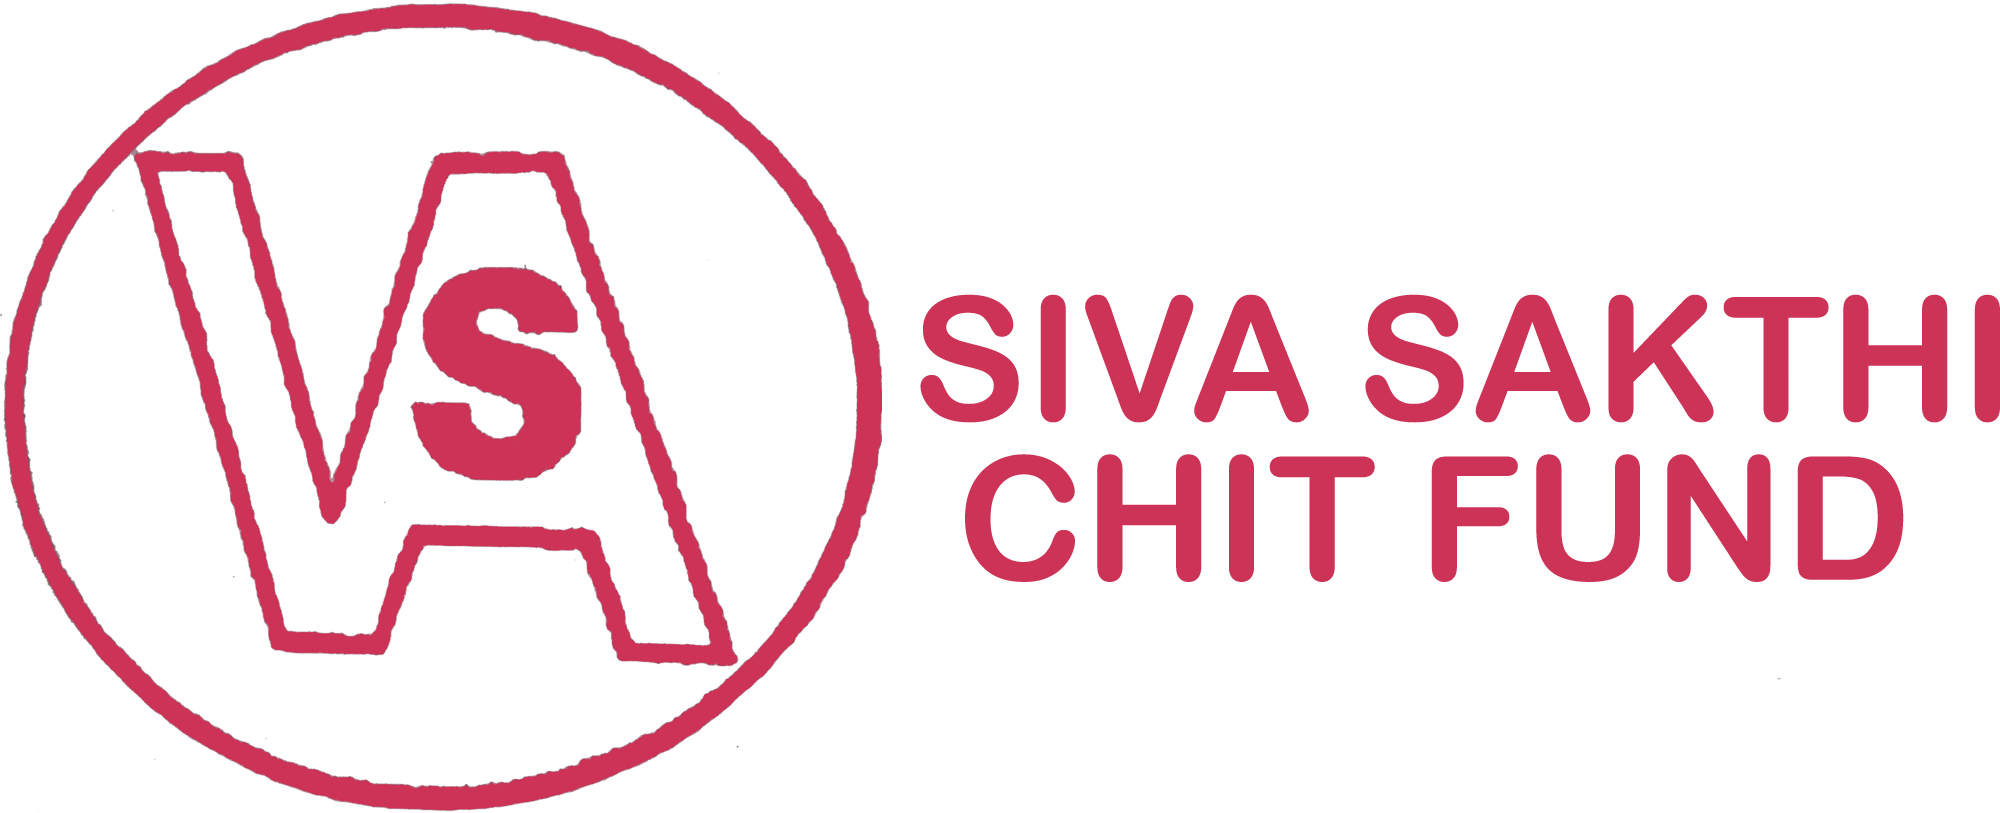 Siva Sakthi Chit Fund Groups